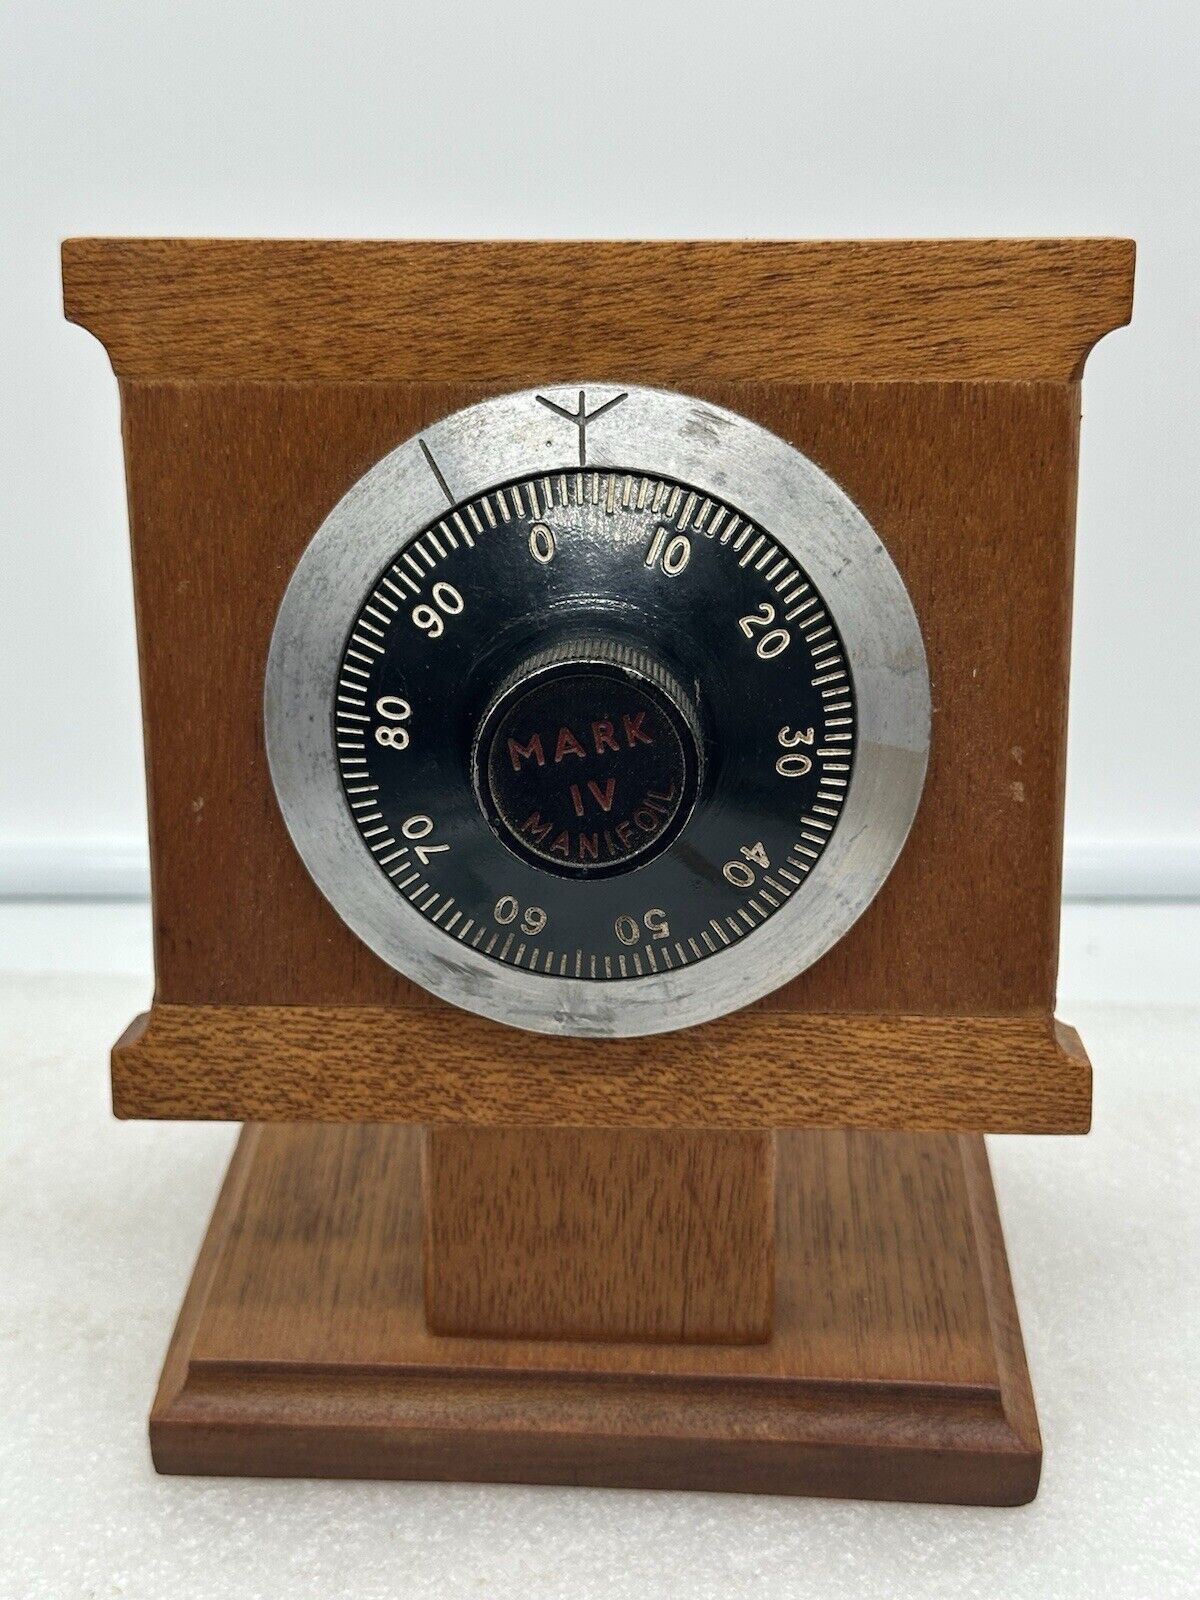 1968 Chubb Mark IV Manifoil Combination Safe Lock Mounted On Wood Display